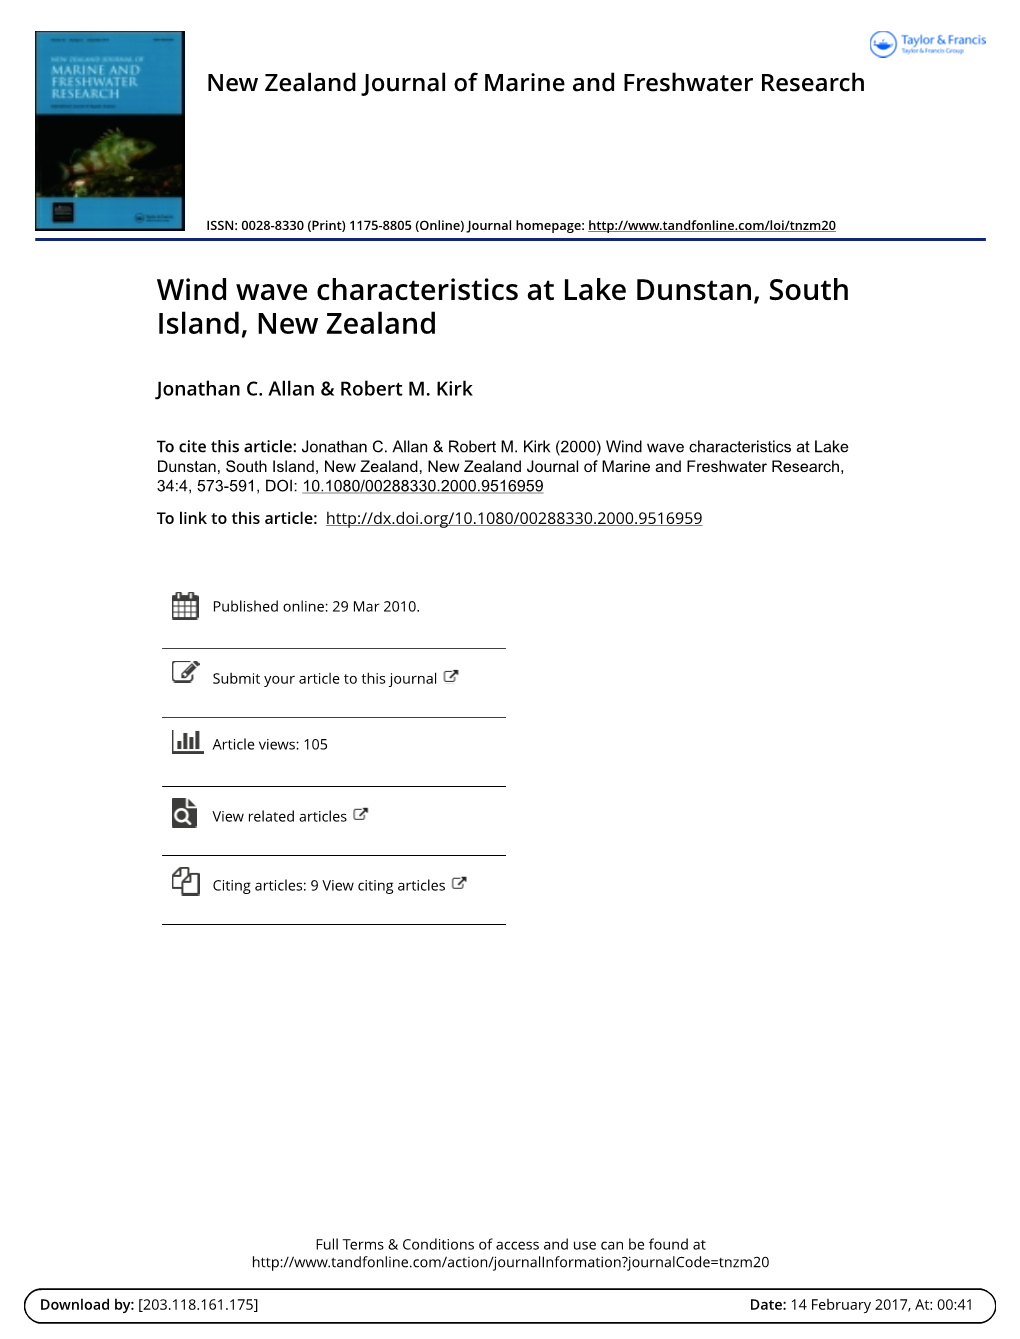 Wind Wave Characteristics at Lake Dunstan, South Island, New Zealand